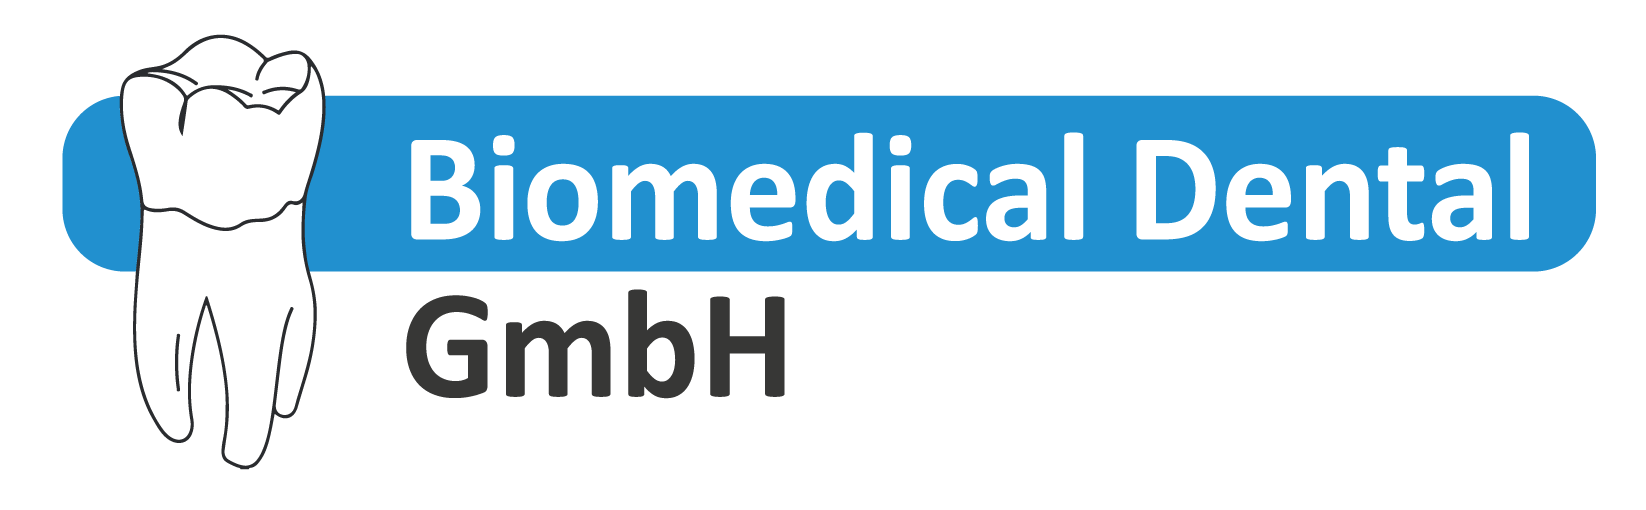 Biomedical Dental GmbH - Dentallabor Bad Wildungen